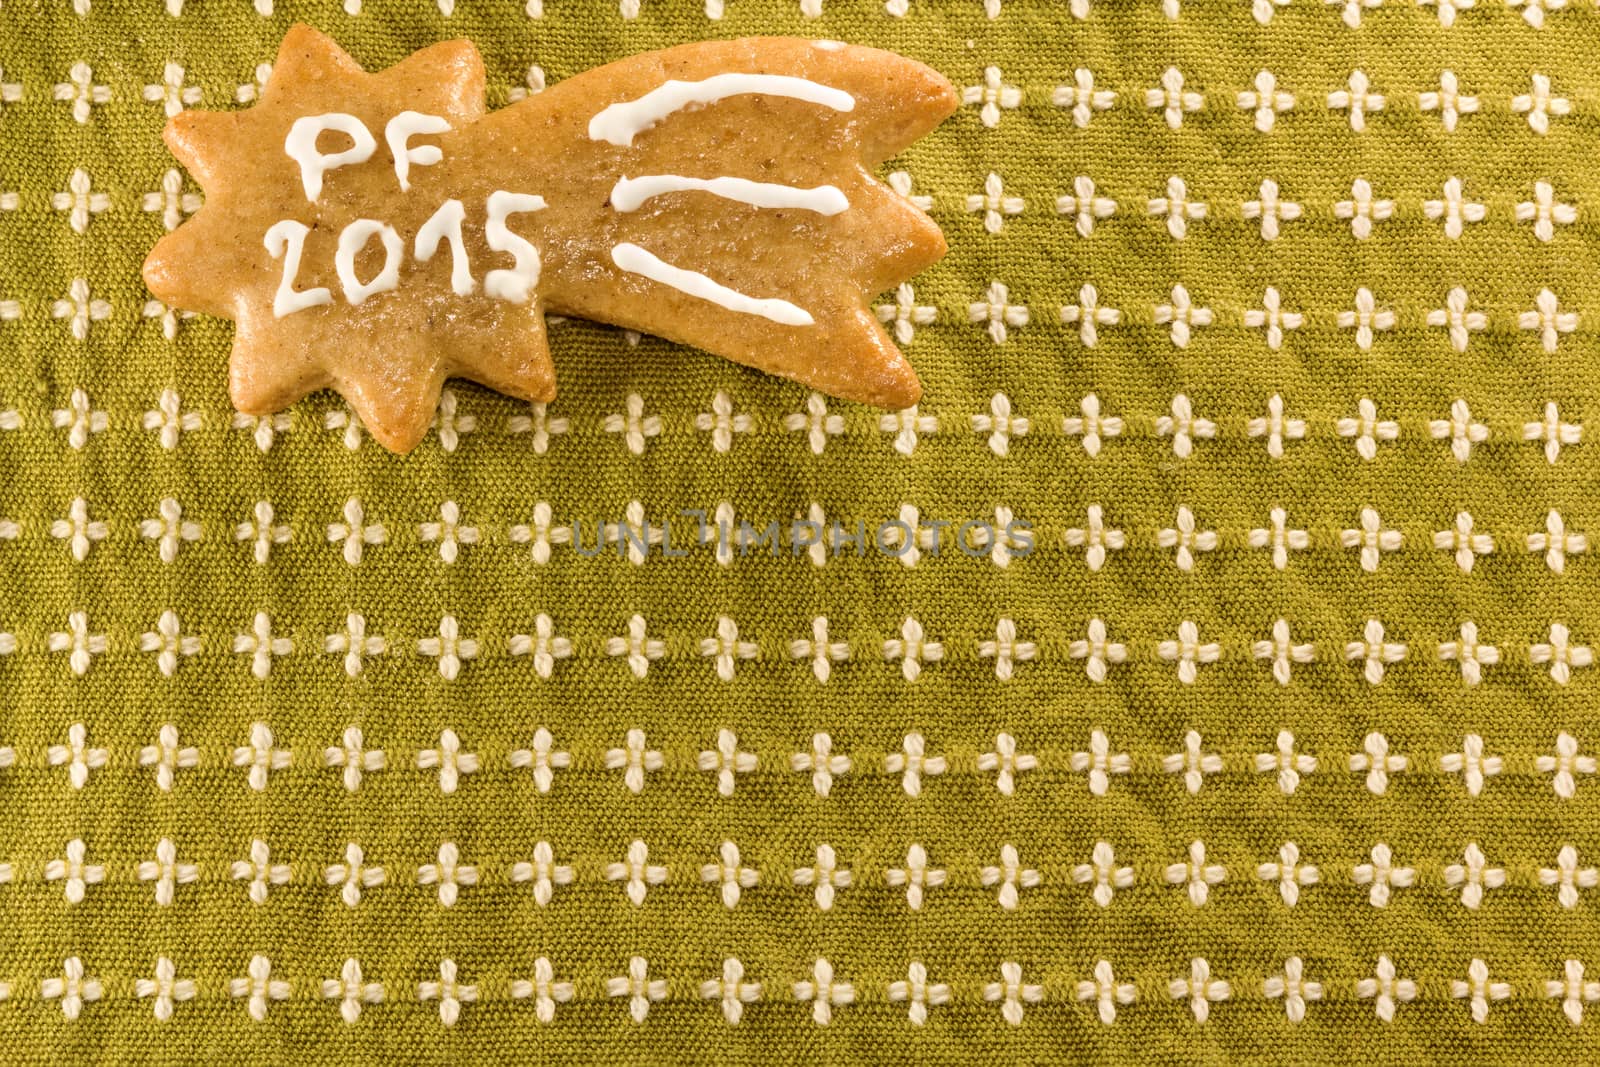 Photo shows a closeup of various gingerbread cookies.